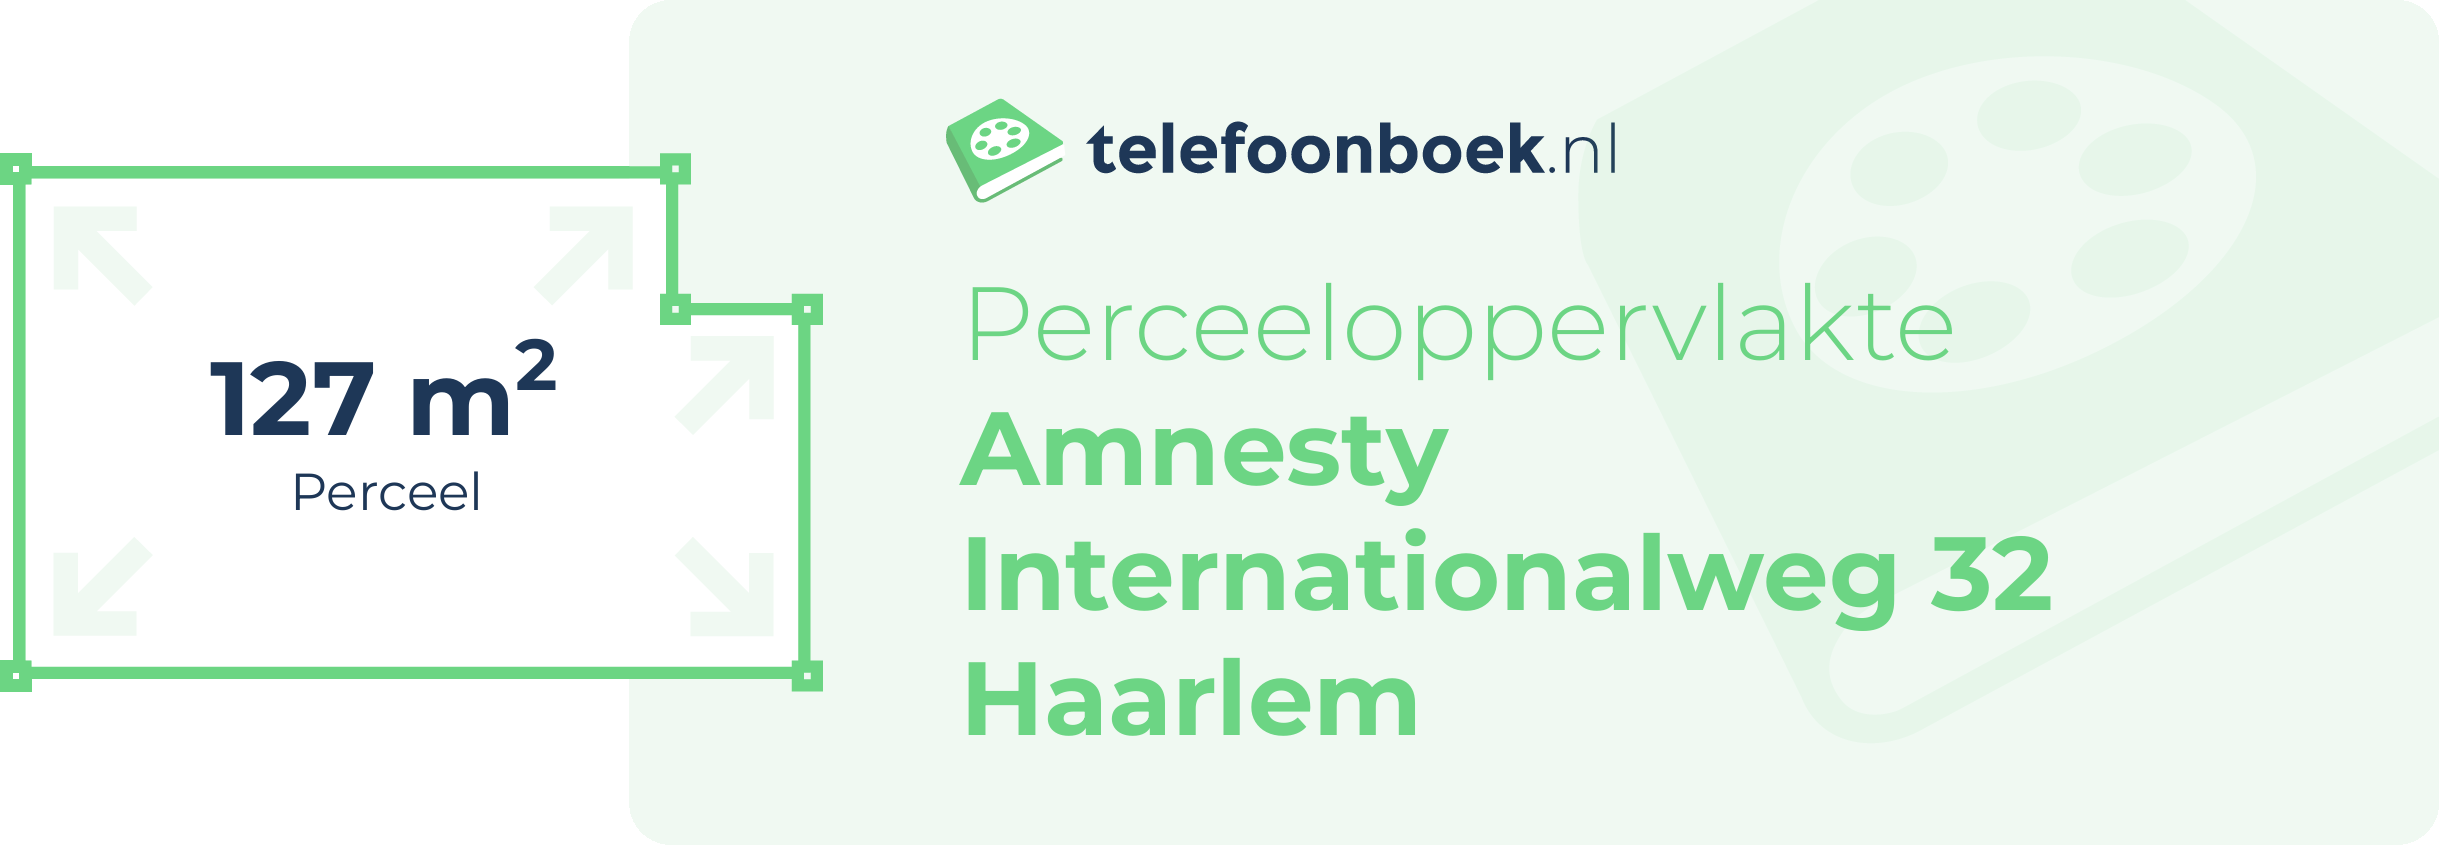 Perceeloppervlakte Amnesty Internationalweg 32 Haarlem